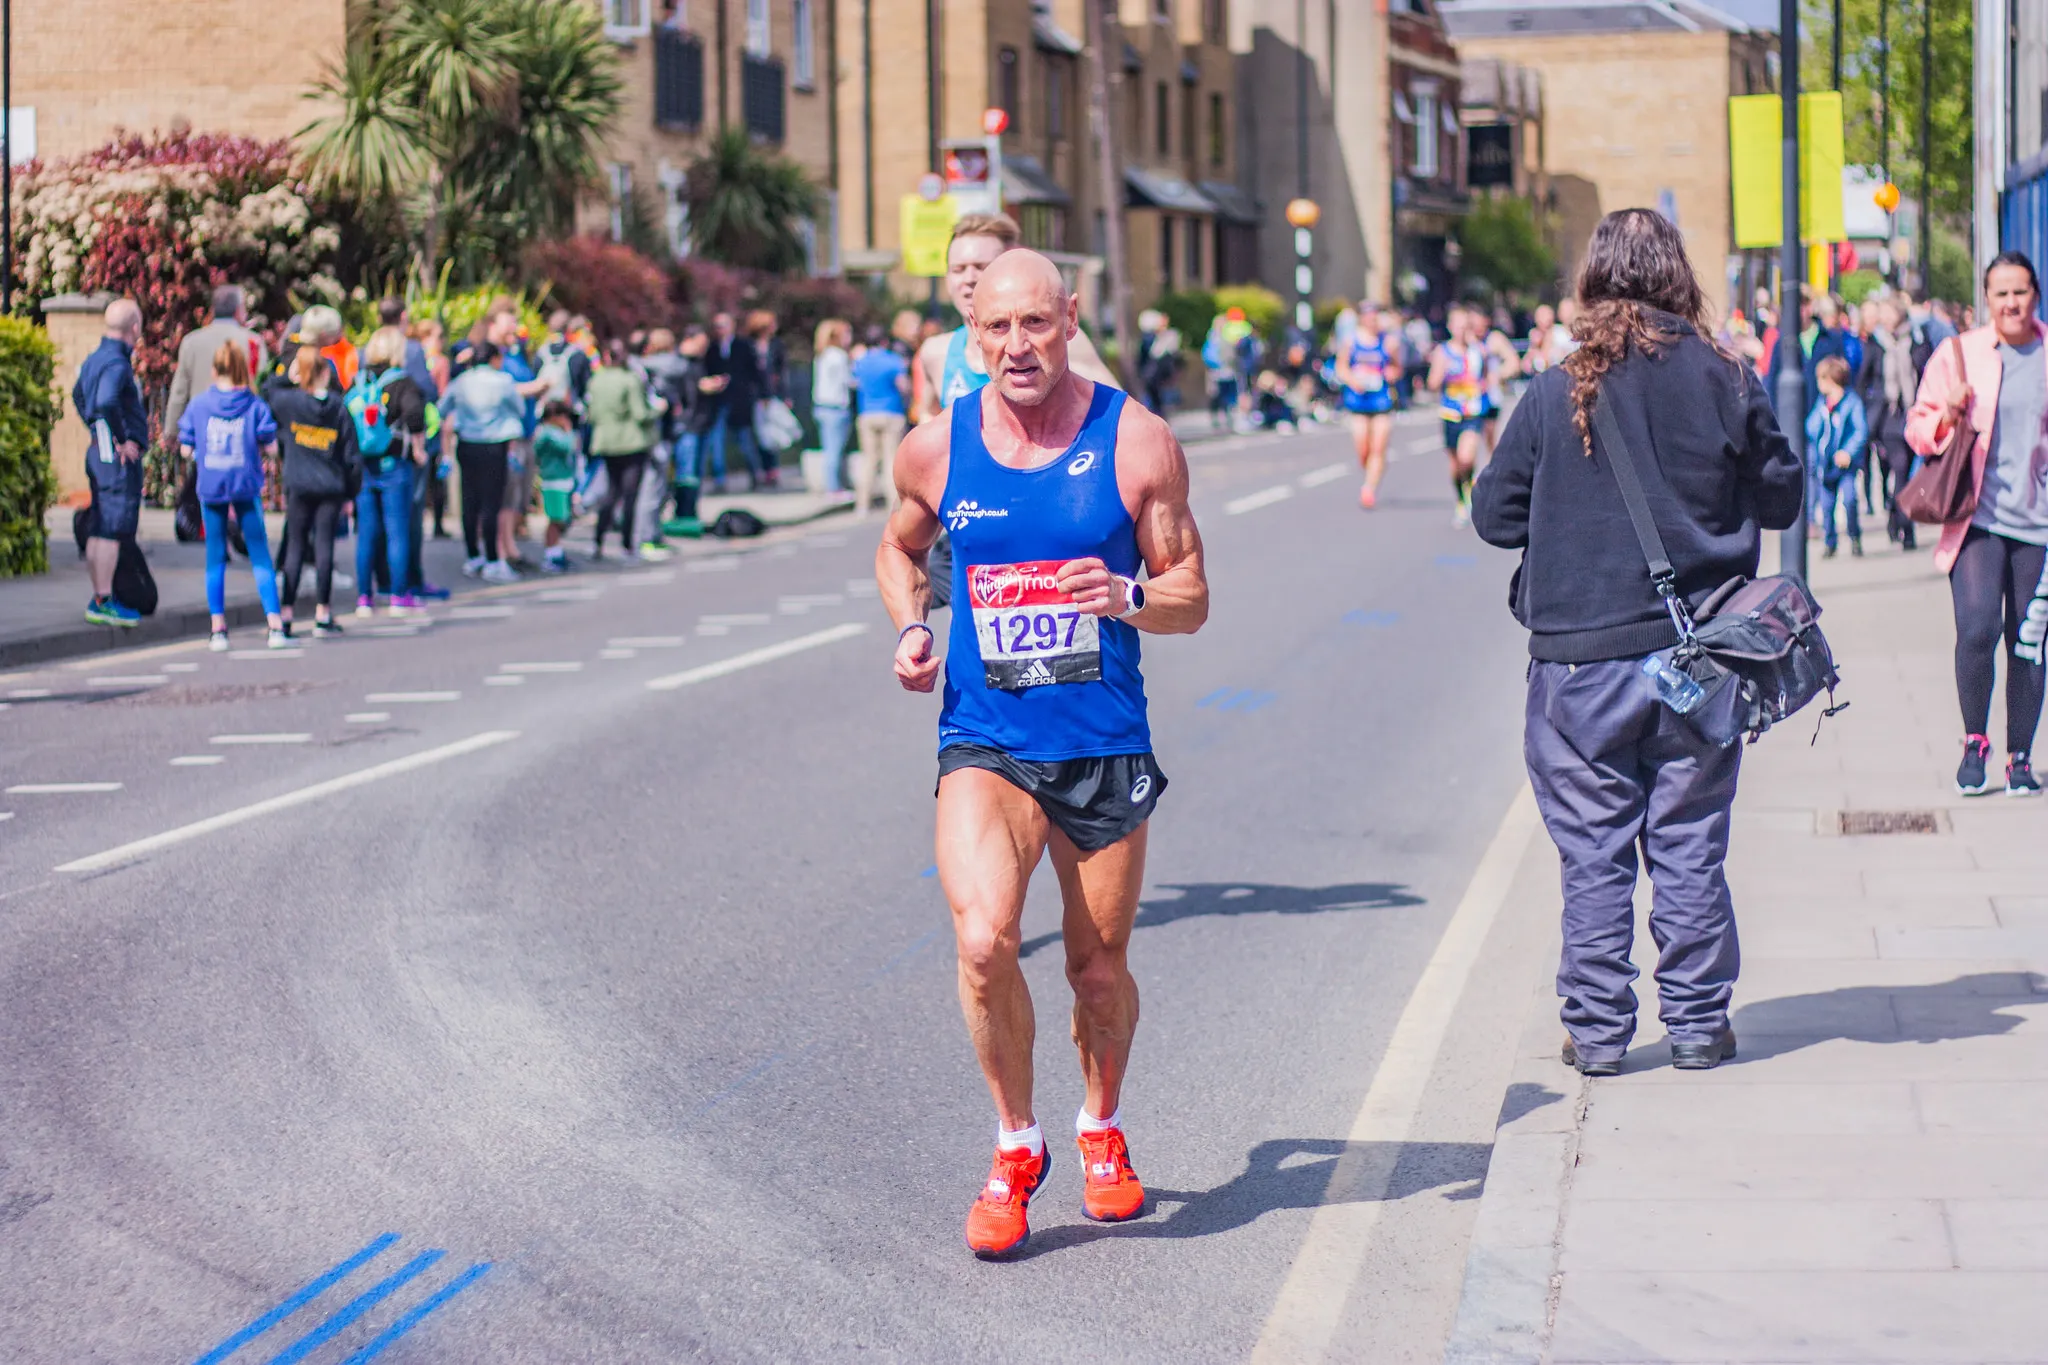 Runner #1297, 2017 London Marathon